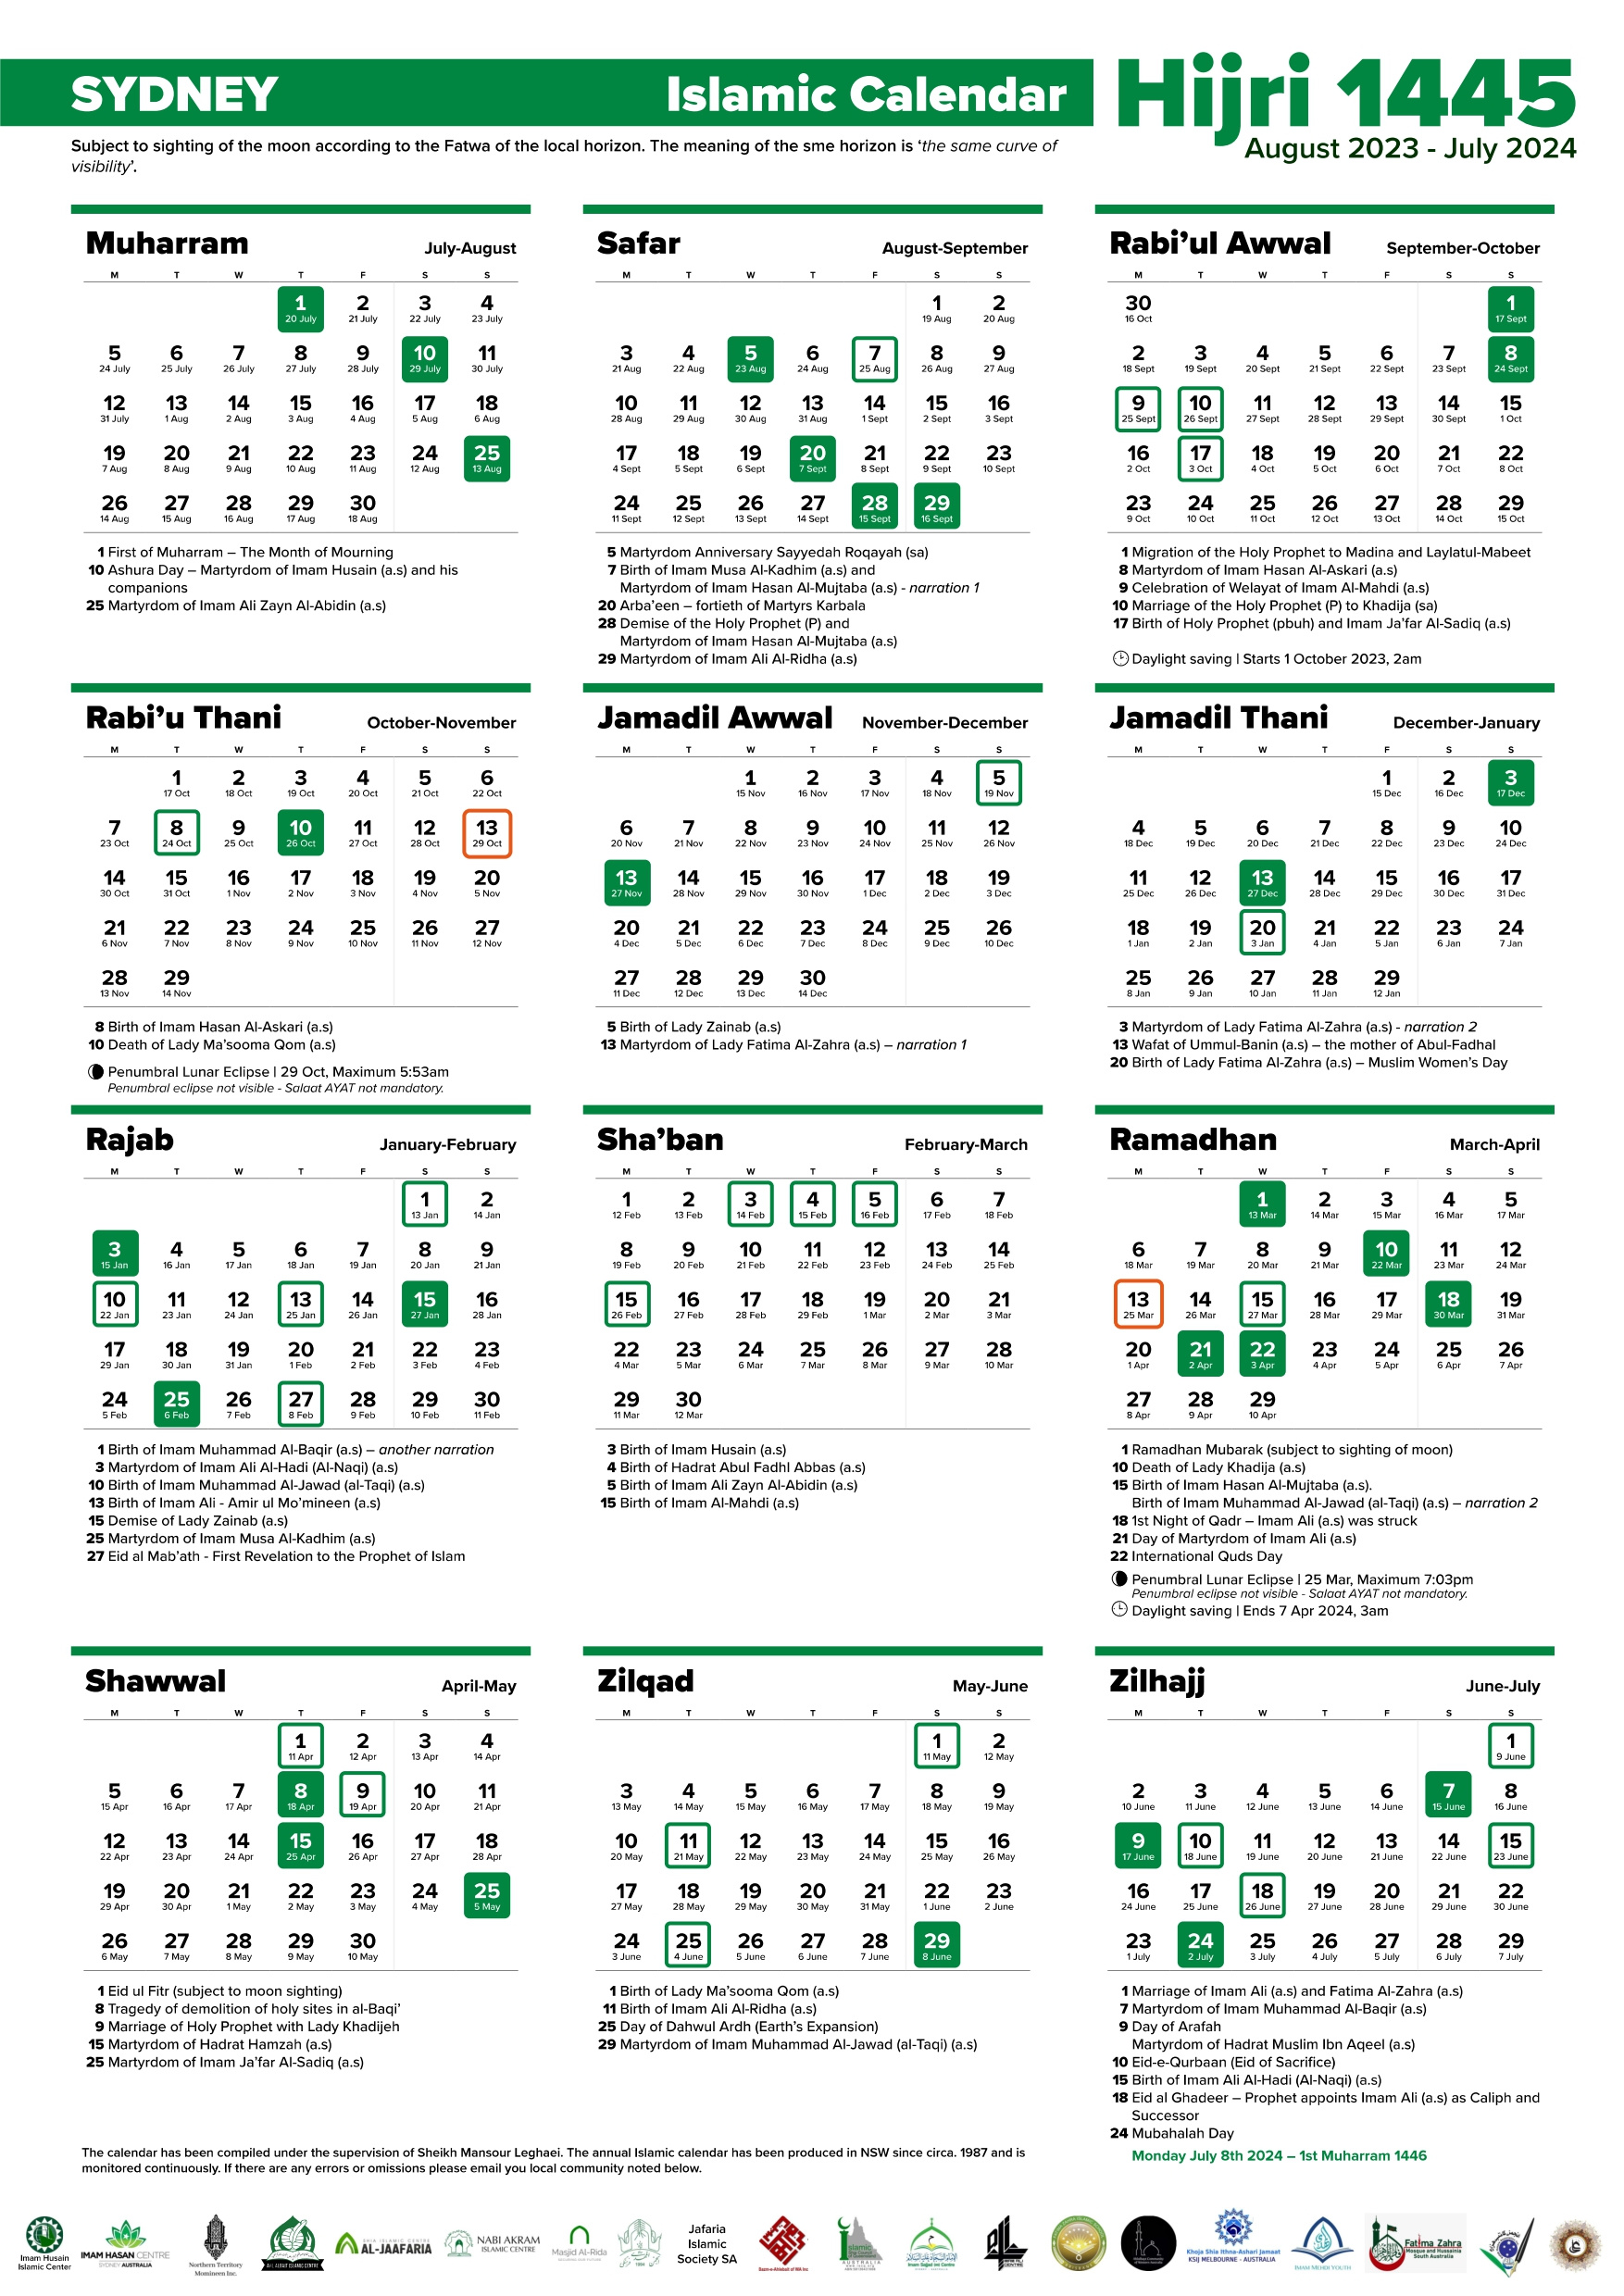 Annual Islamic Calendar 1445 Ah / 2023-2024 Ad – Imam Husain in 5 July 2024 in Islamic Calendar